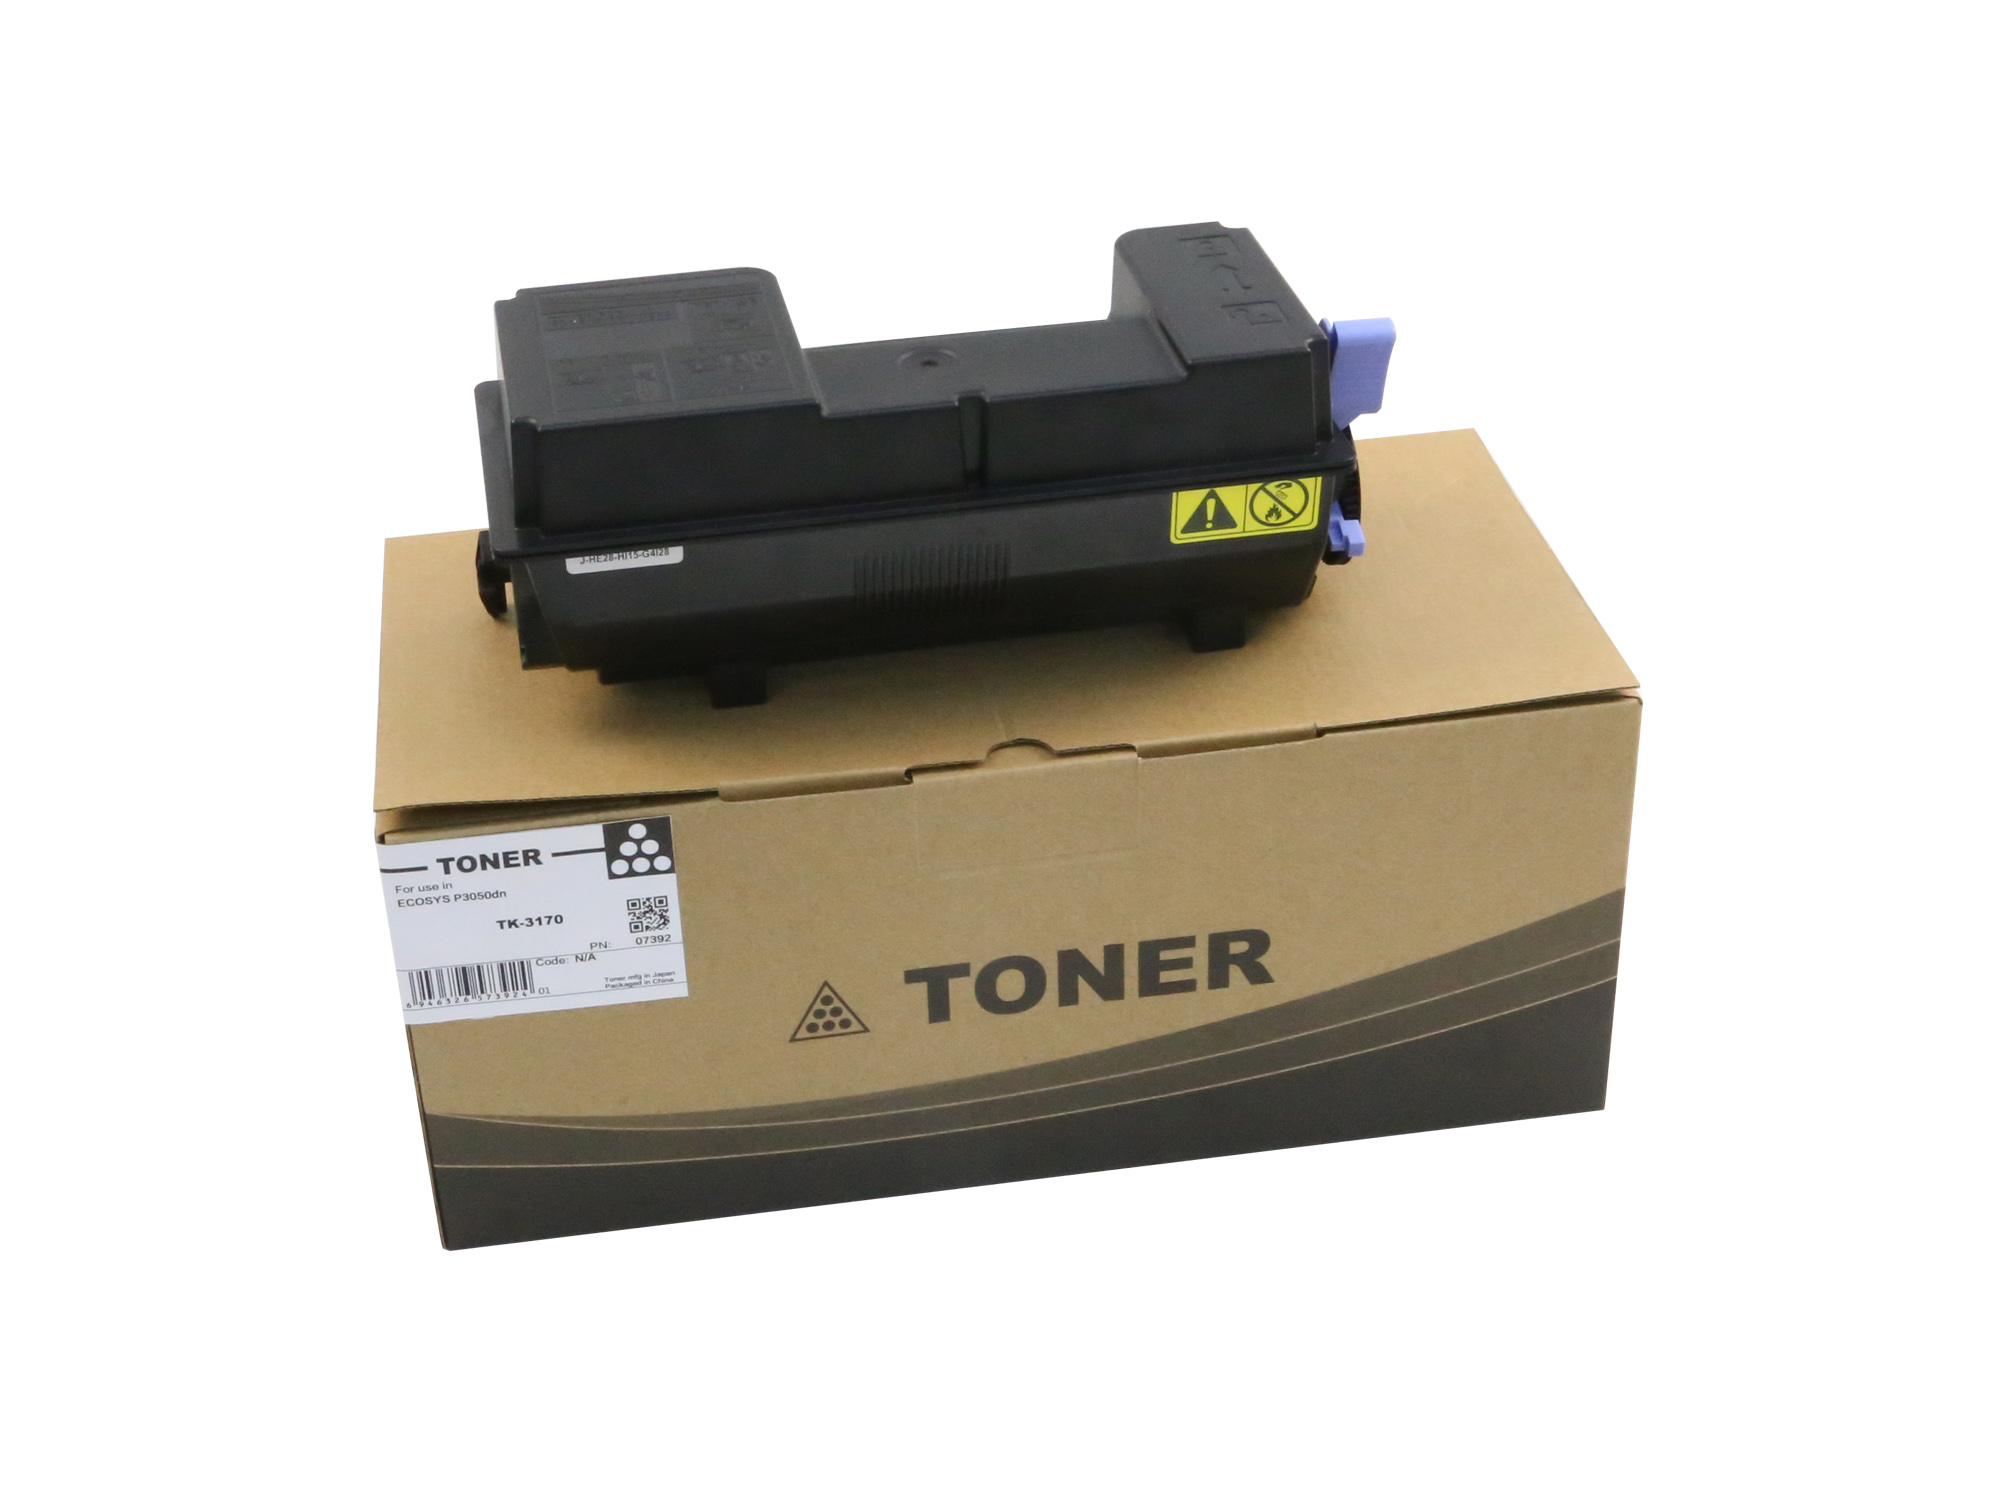 TK-3170 Toner Cartridge for Kyocera ECOSYS P3050dn